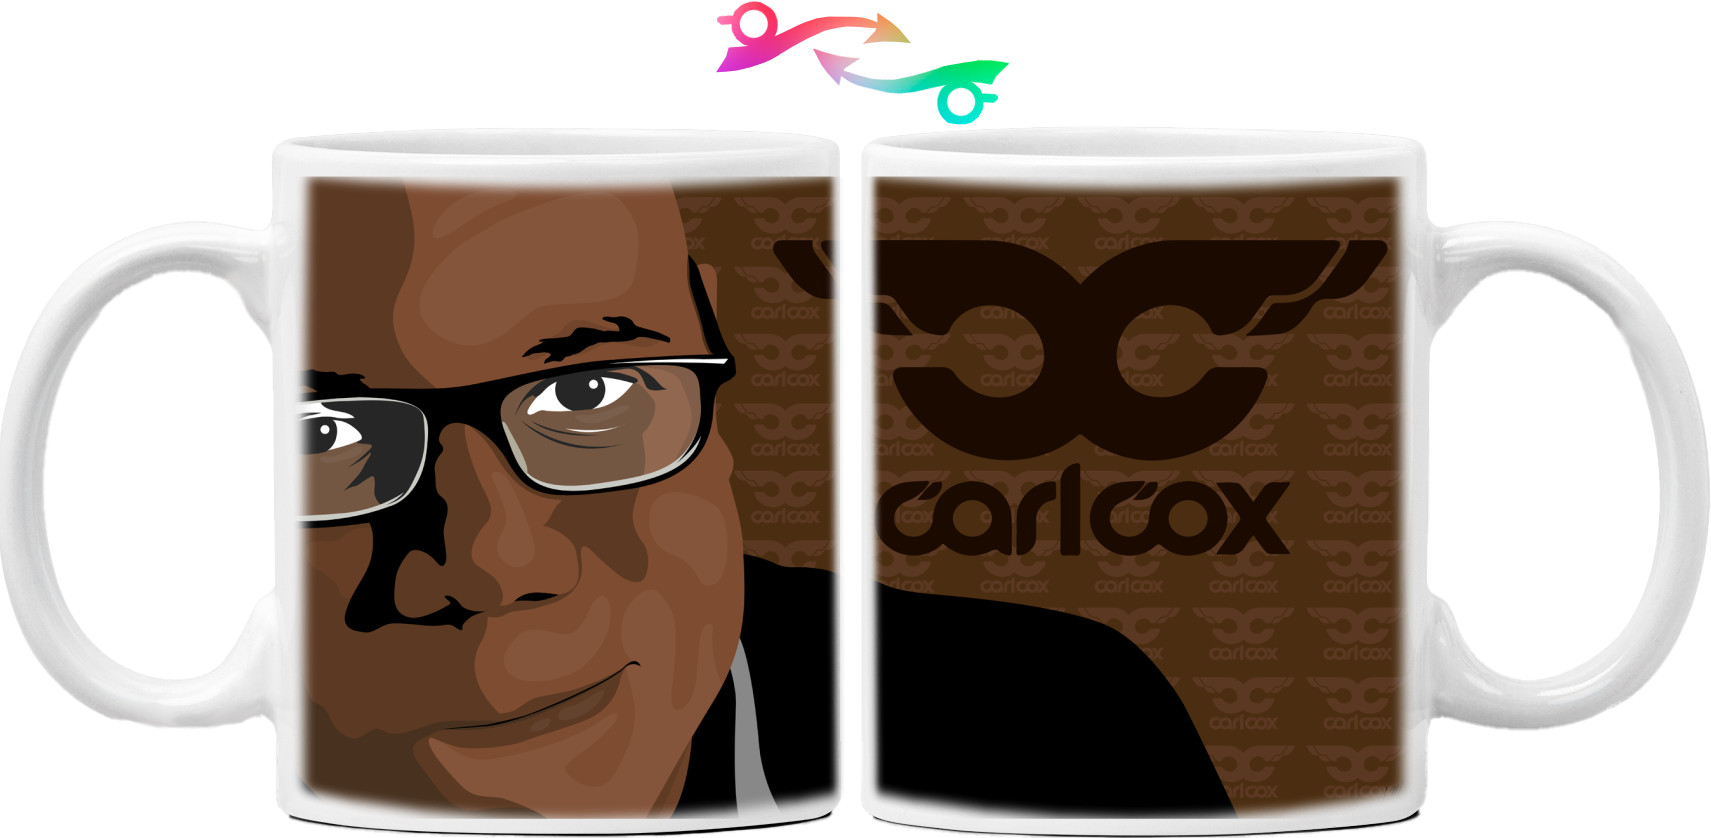 Carl Cox - 4